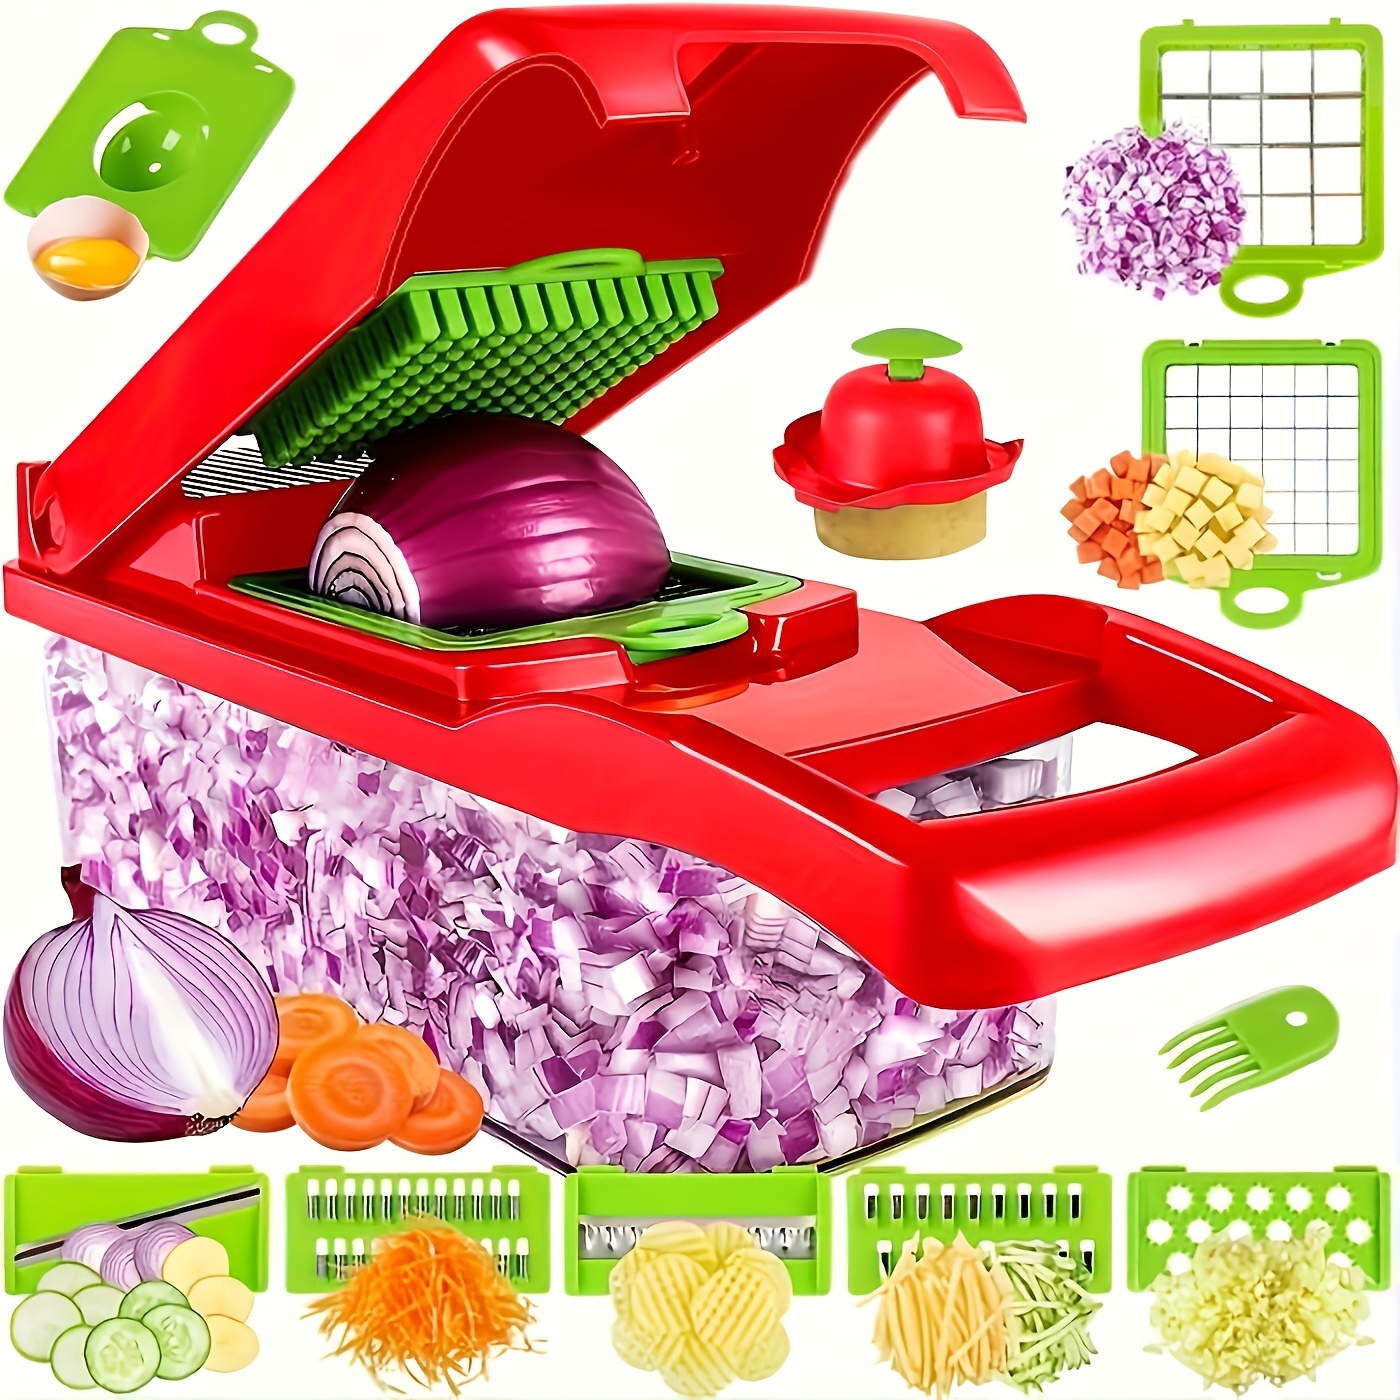 Vegi Chop Pro 6-in-1 Kitchen Multifunctional Vegetable Chopper–  SearchFindOrder